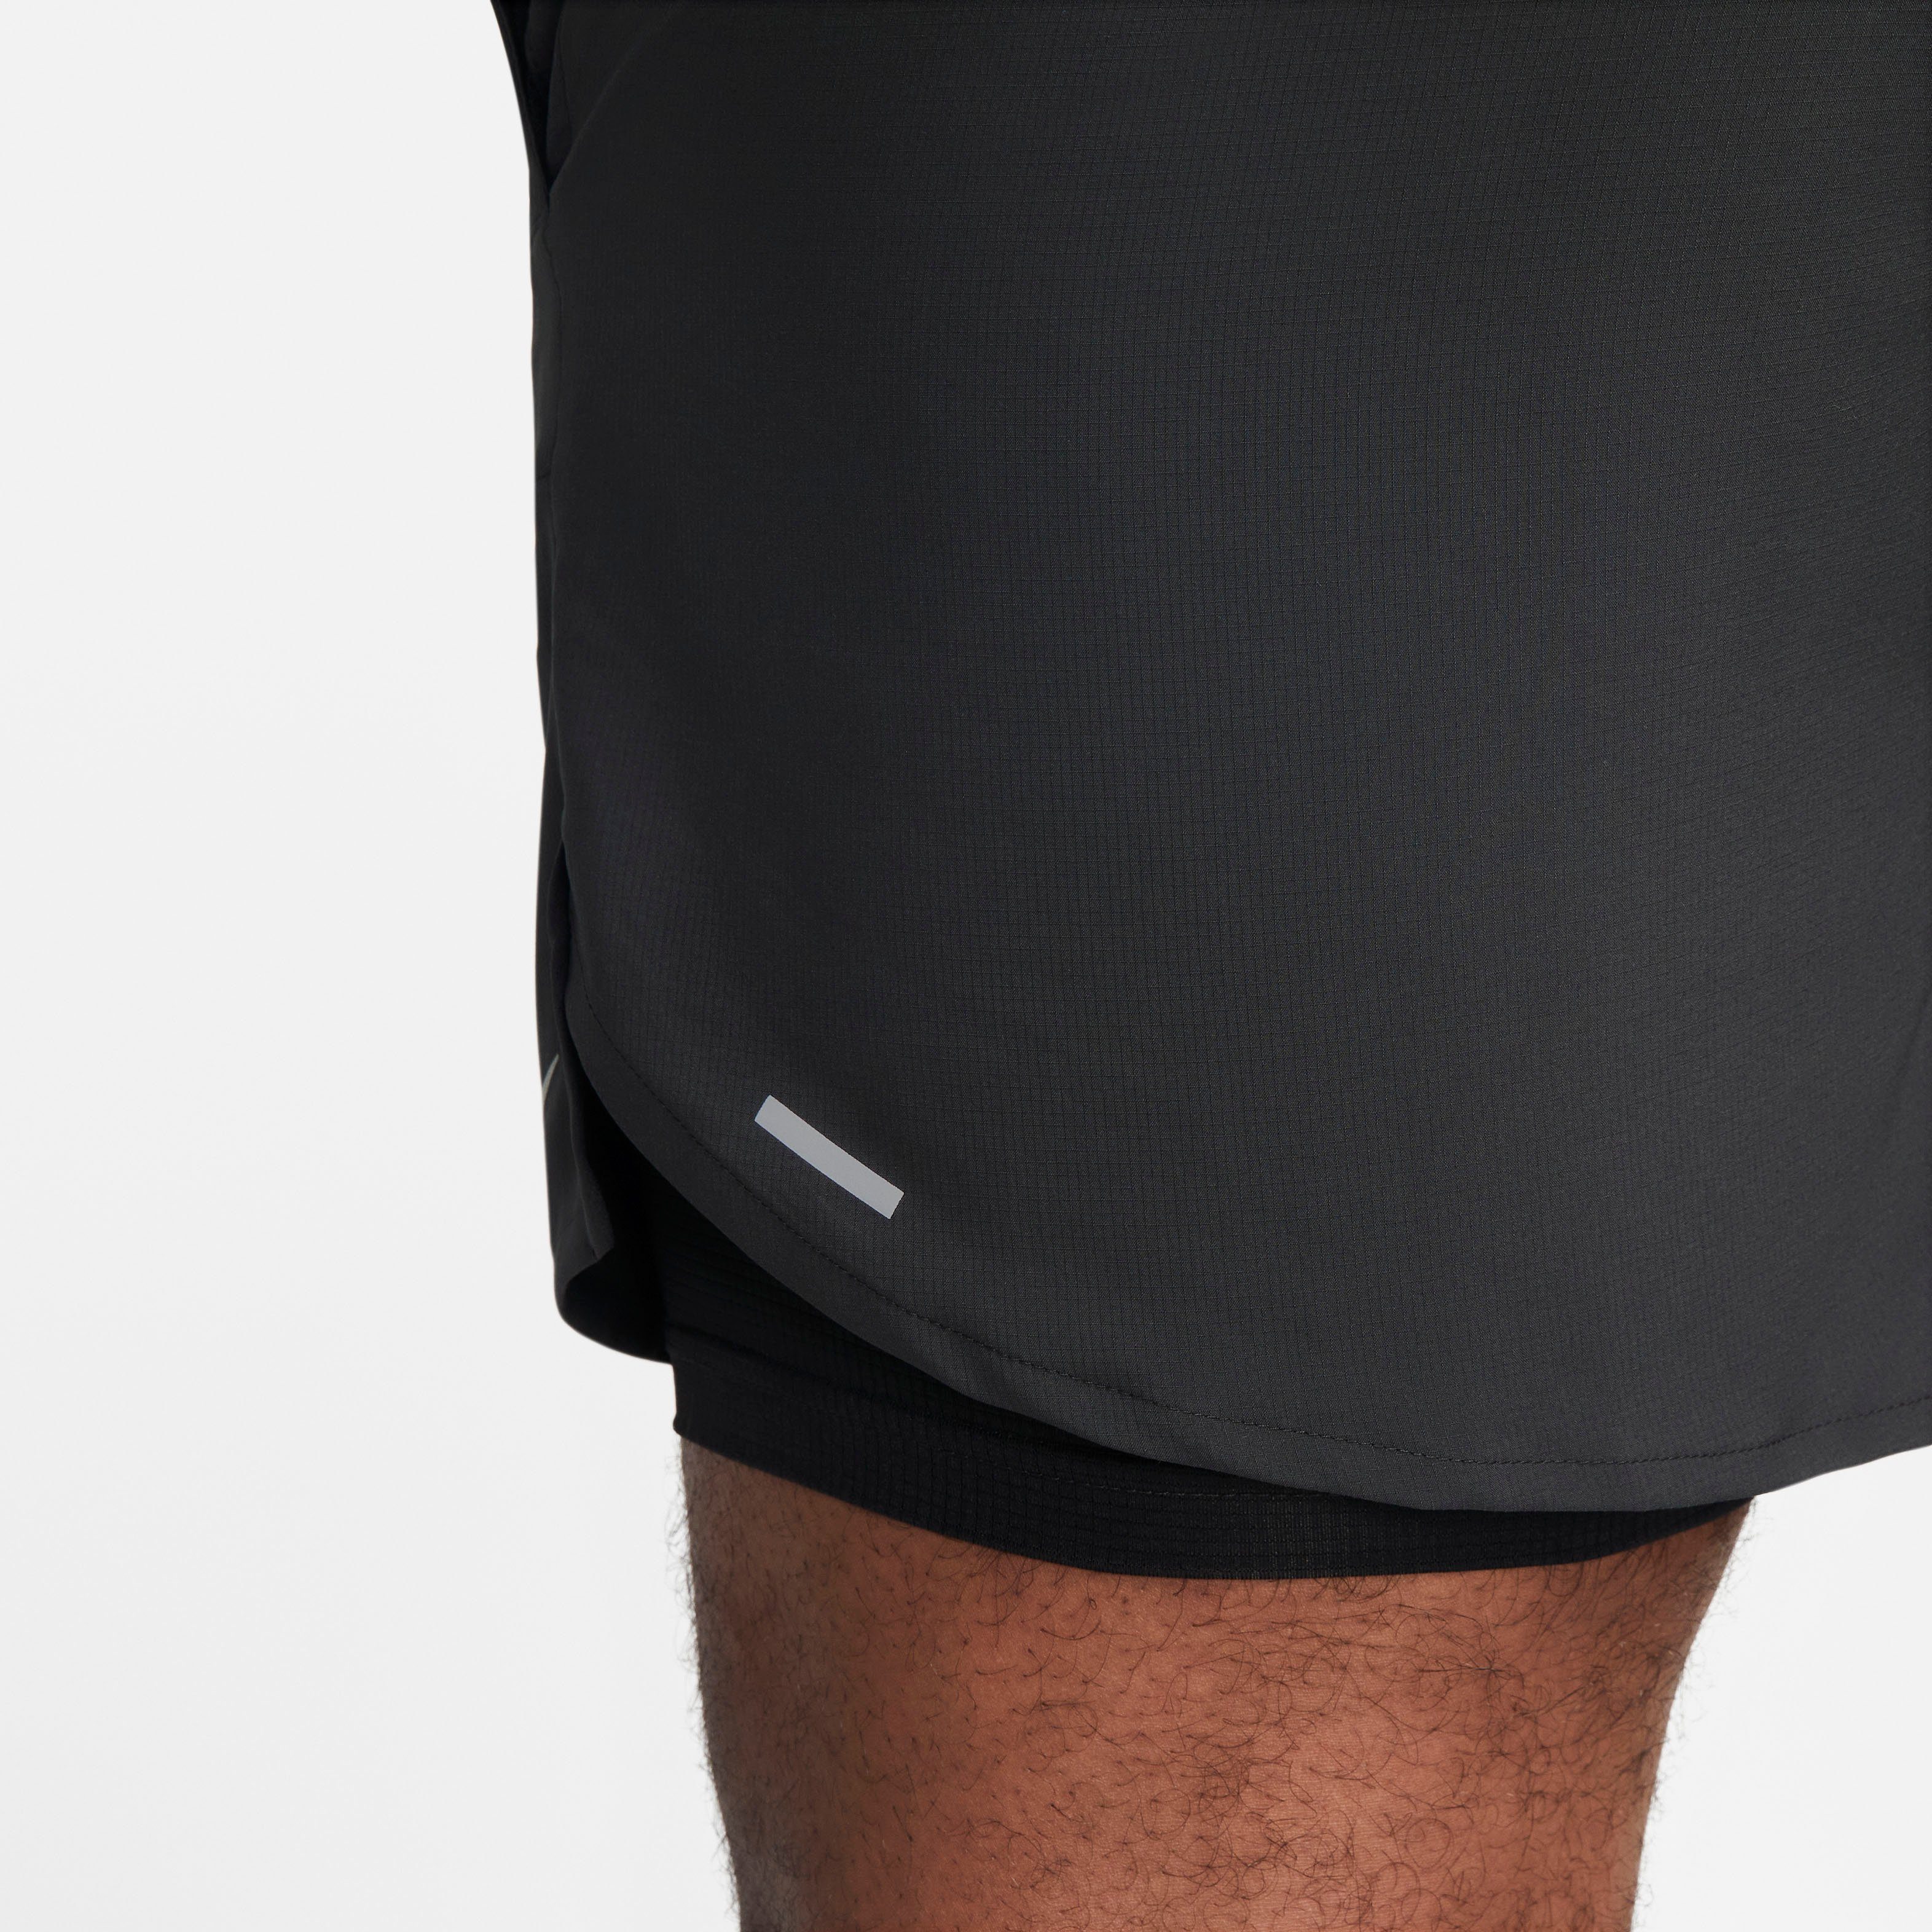 2-In-1 Men's Shorts Stride Running SILV 2-in-1-Shorts Dri-FIT " Nike BLACK/BLACK/BLACK/REFLECTIVE